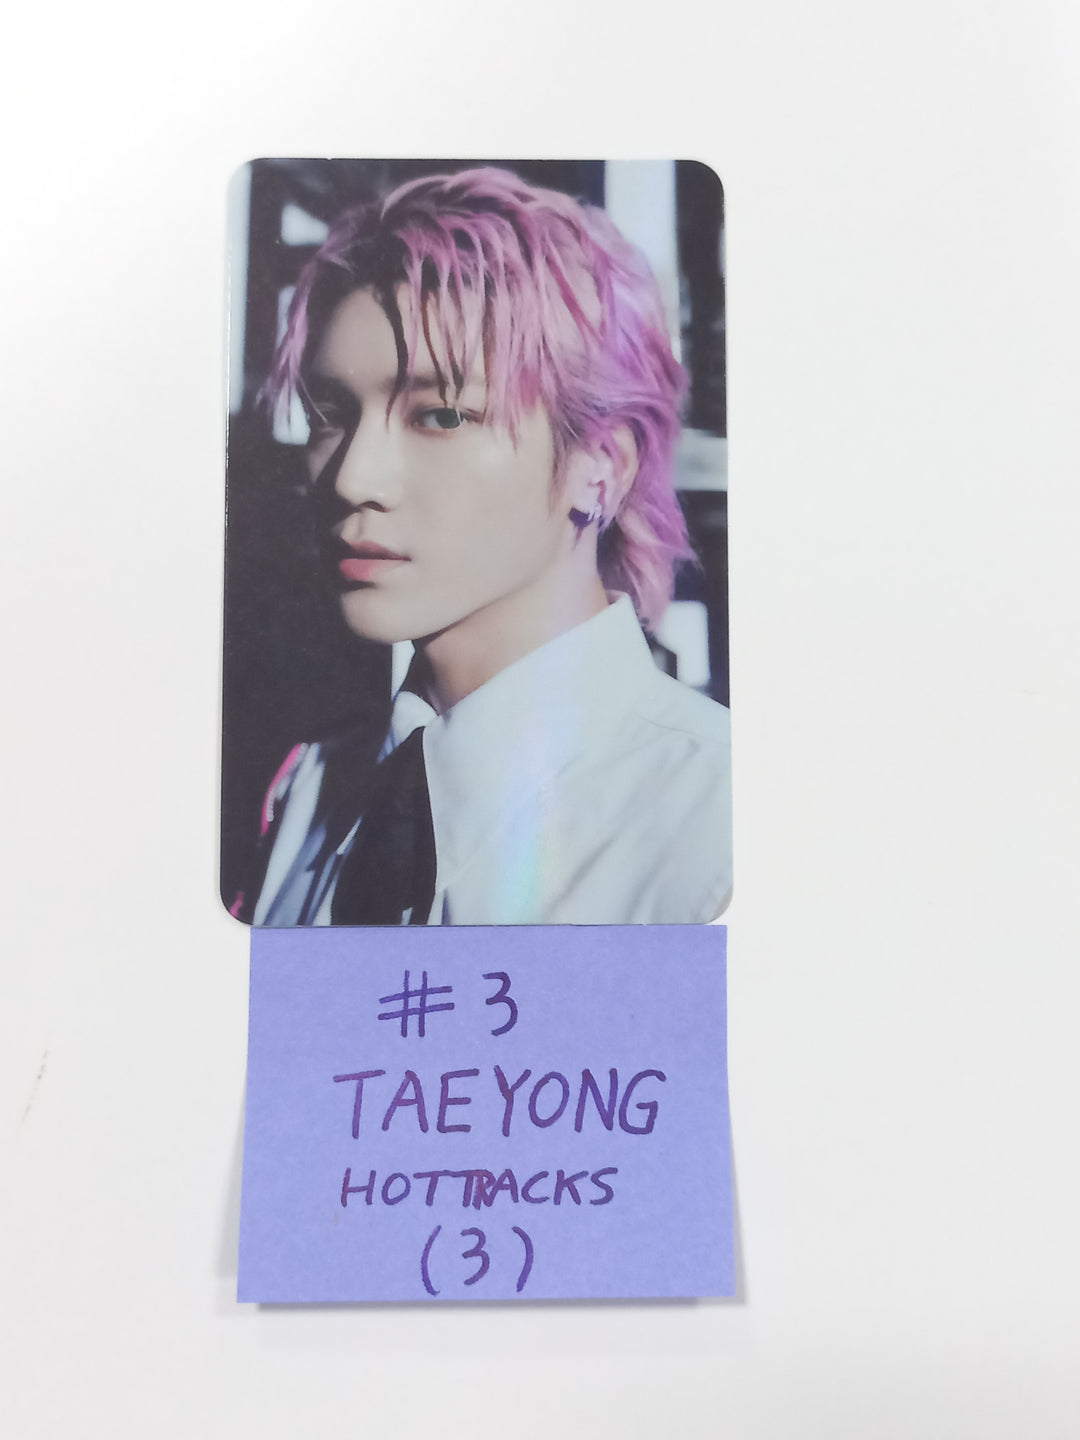 NCT 127 "Fact Check" - Hottracks Offline Event Hologram Photocard [23.10.11]